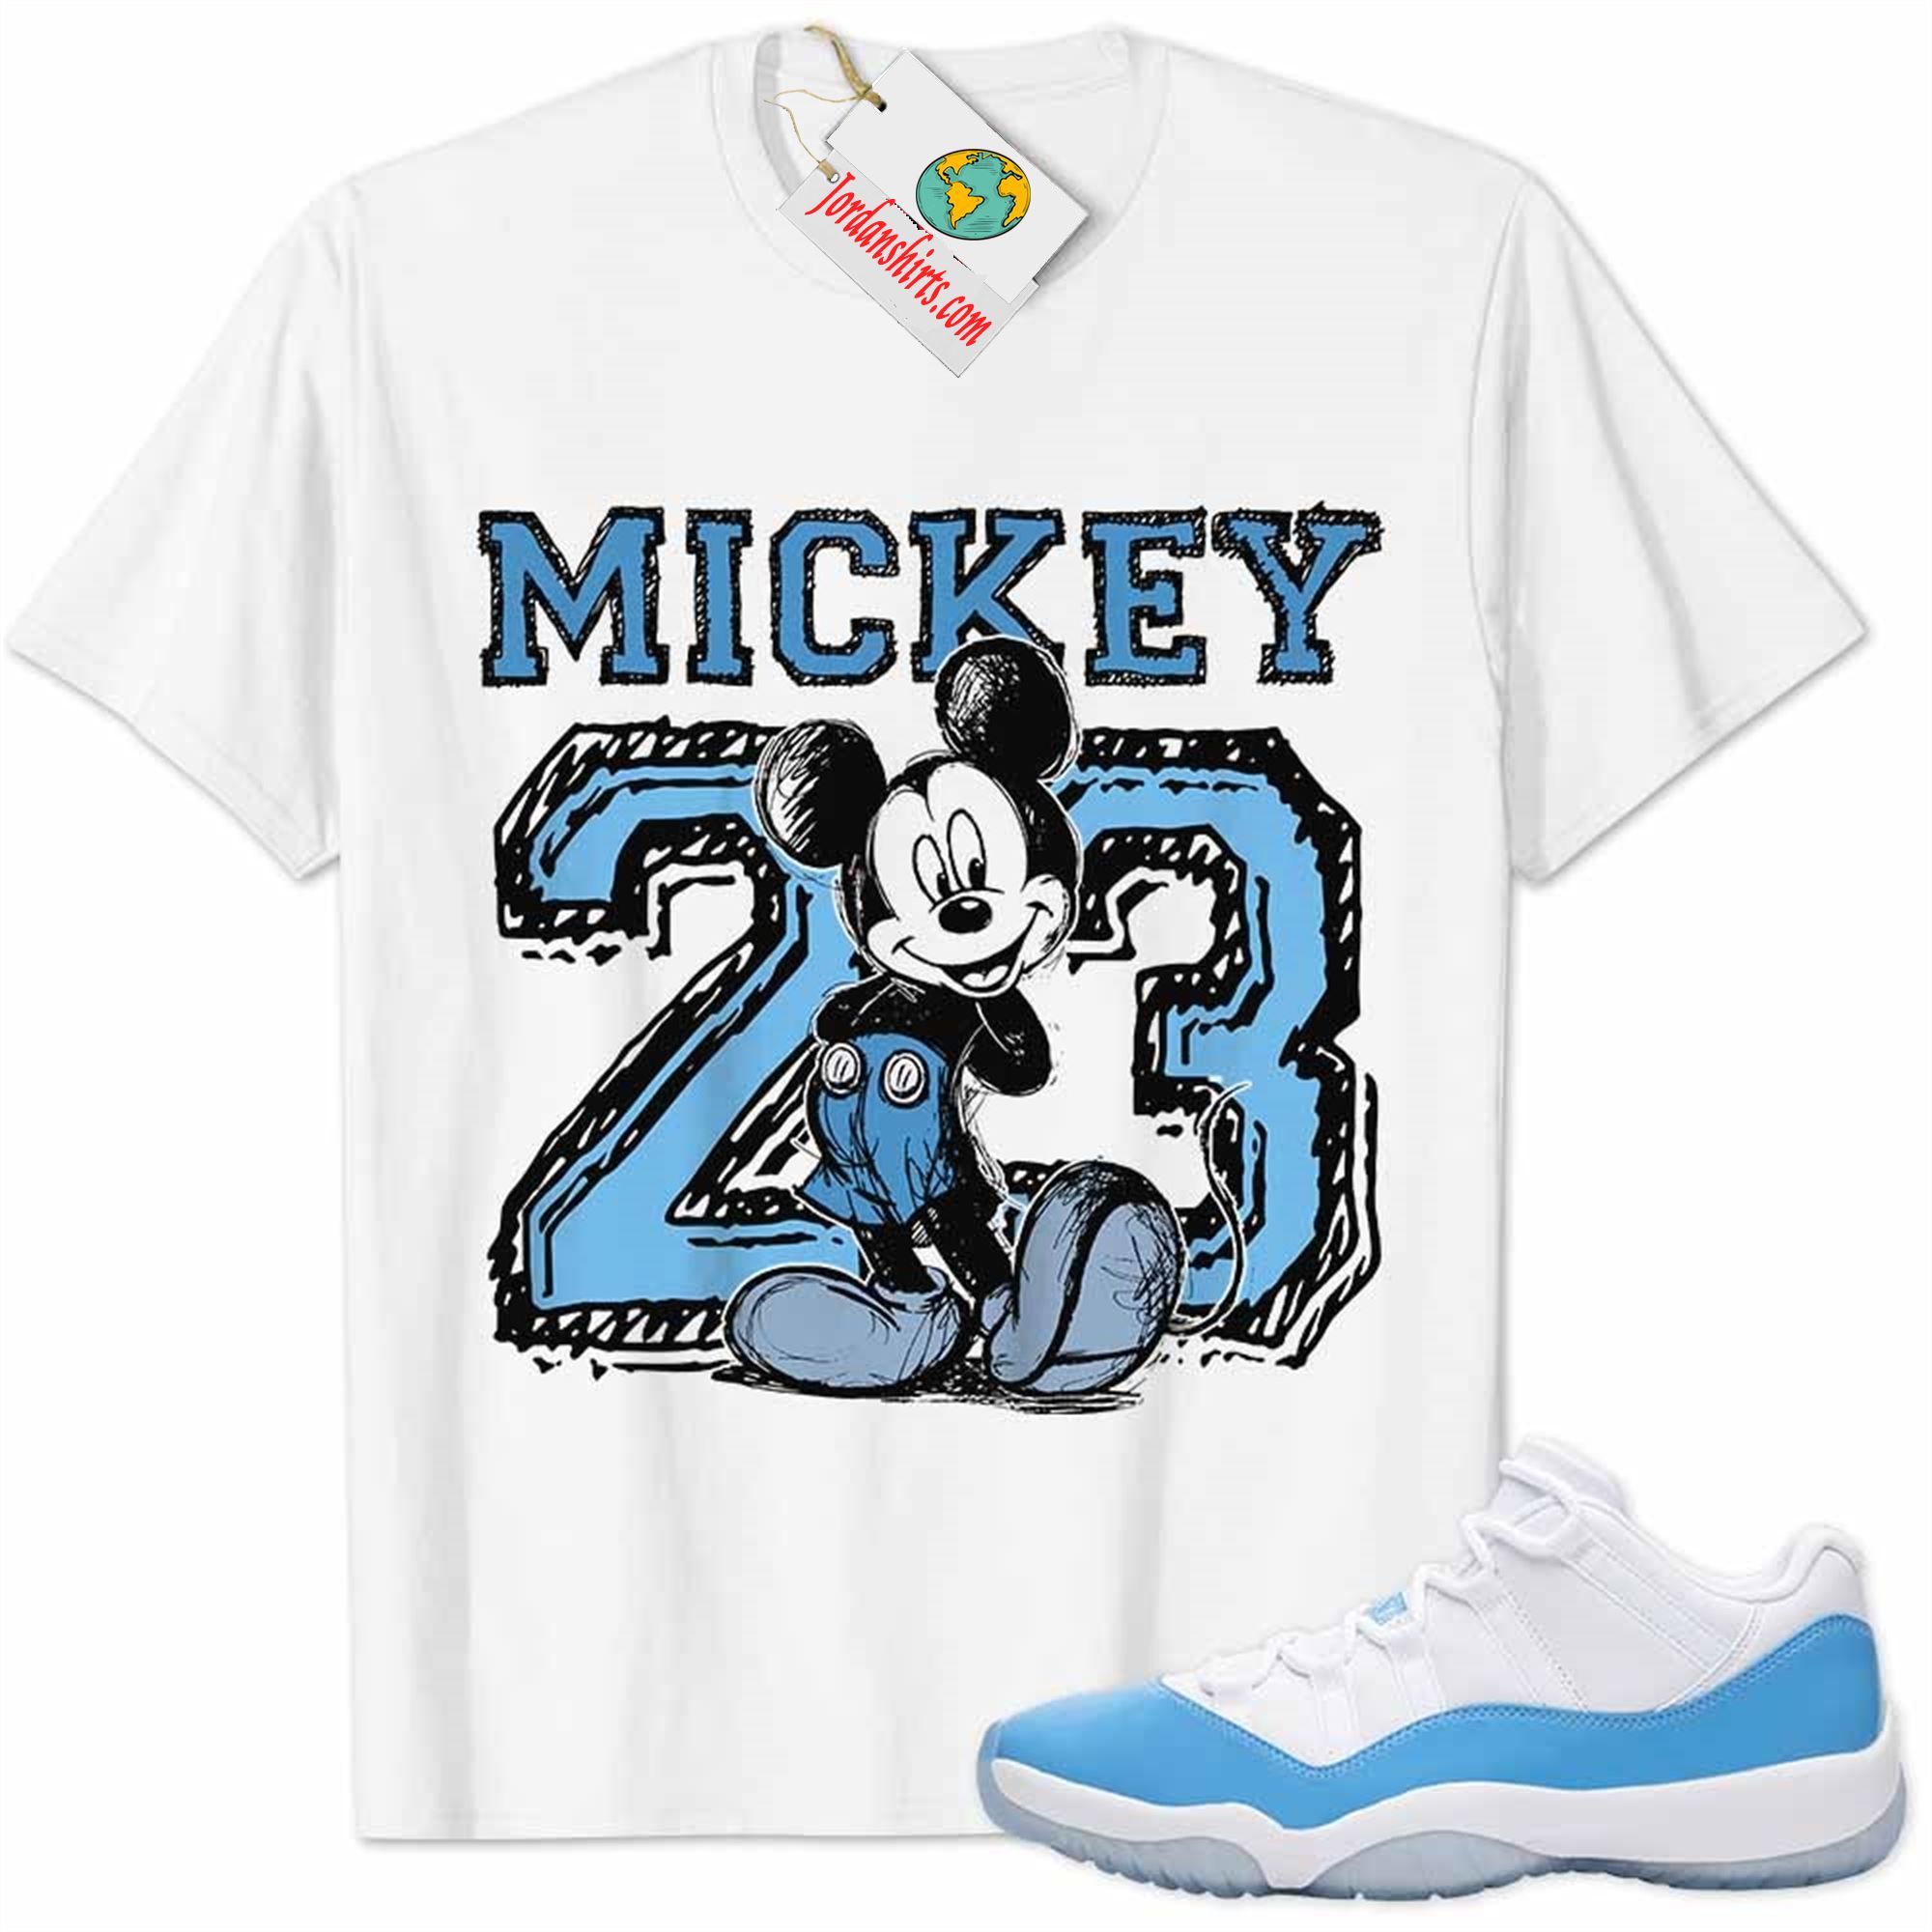 Jordan 11 Shirt, Unc 11s Shirt Mickey 23 Michael Jordan Number Draw White Full Size Up To 5xl